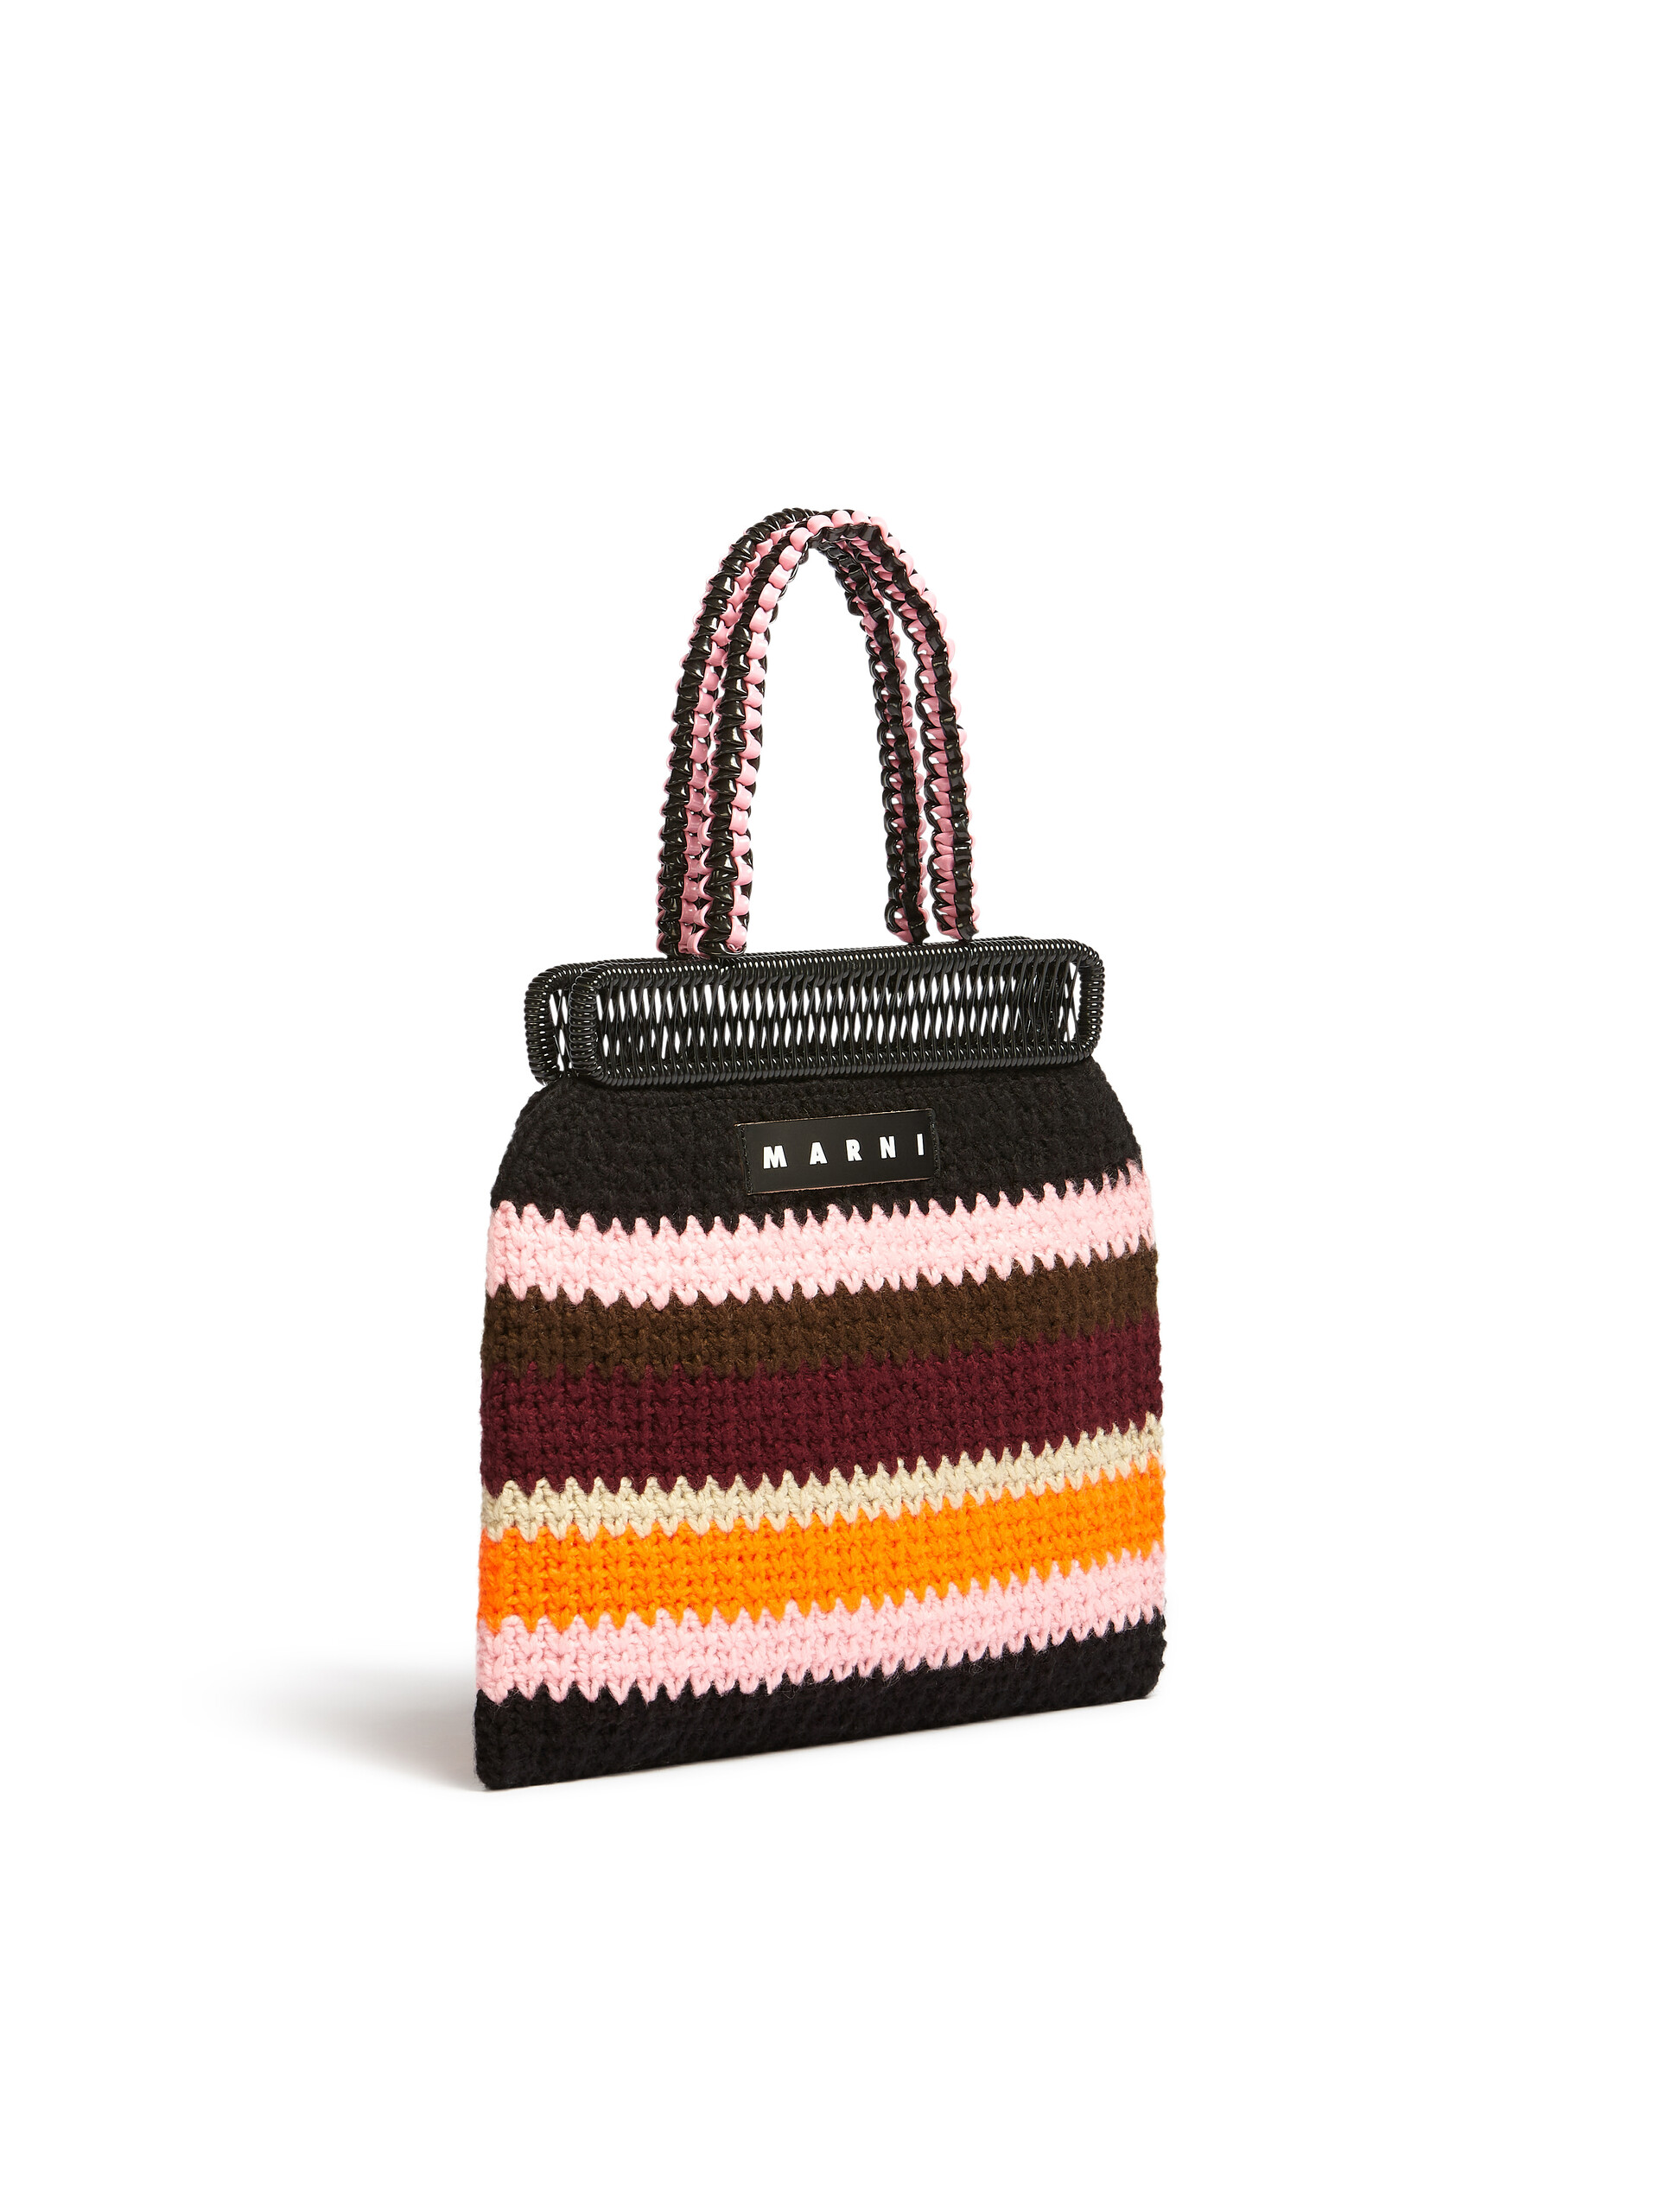 MARNI MARKET bag in multicolour pink crochet wool - Furniture - Image 2